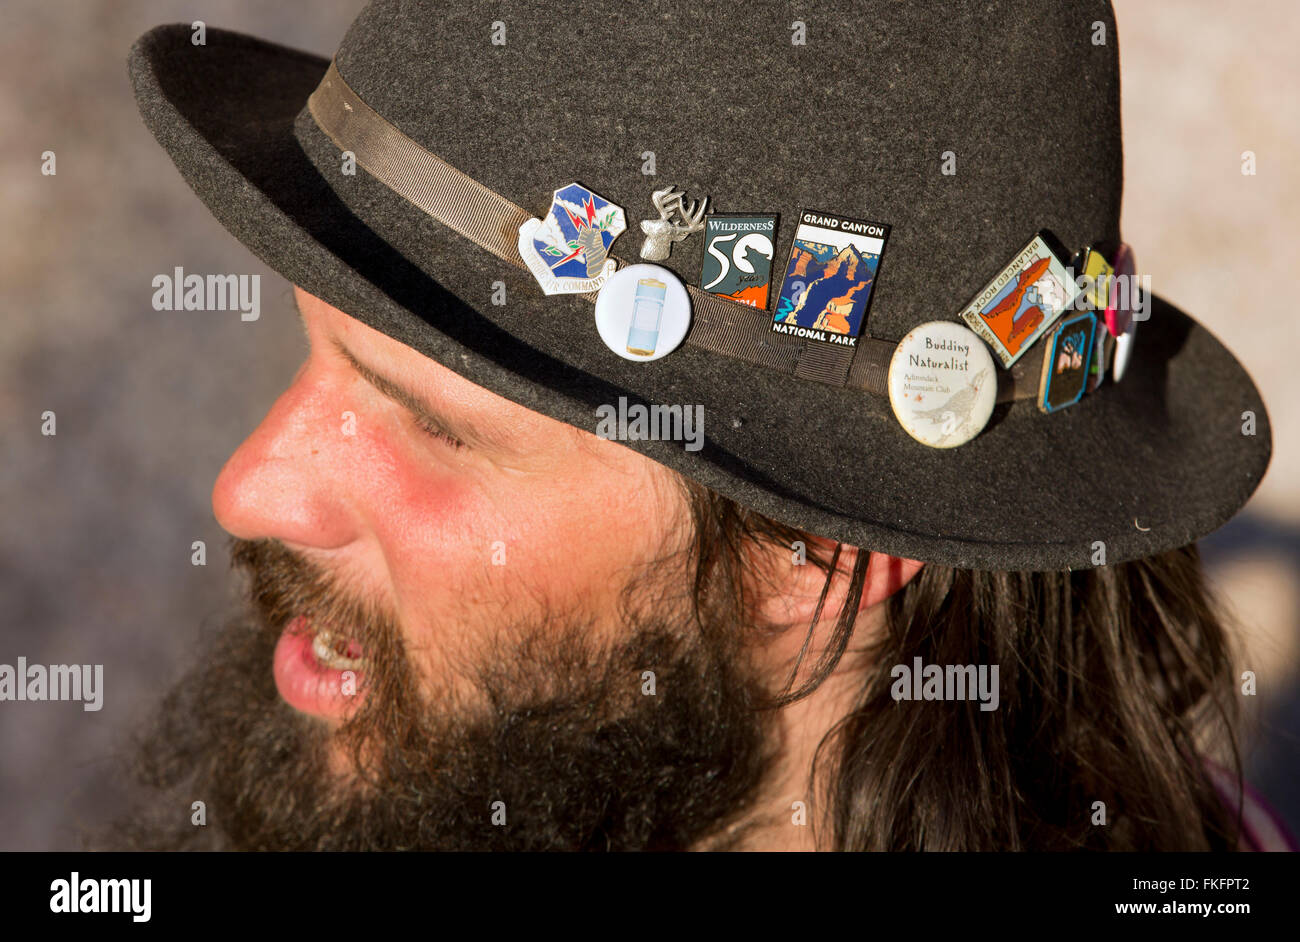 Badges on a rock climber's hat, Hidden Valley, Joshua Tree National Park, California, USA Stock Photo